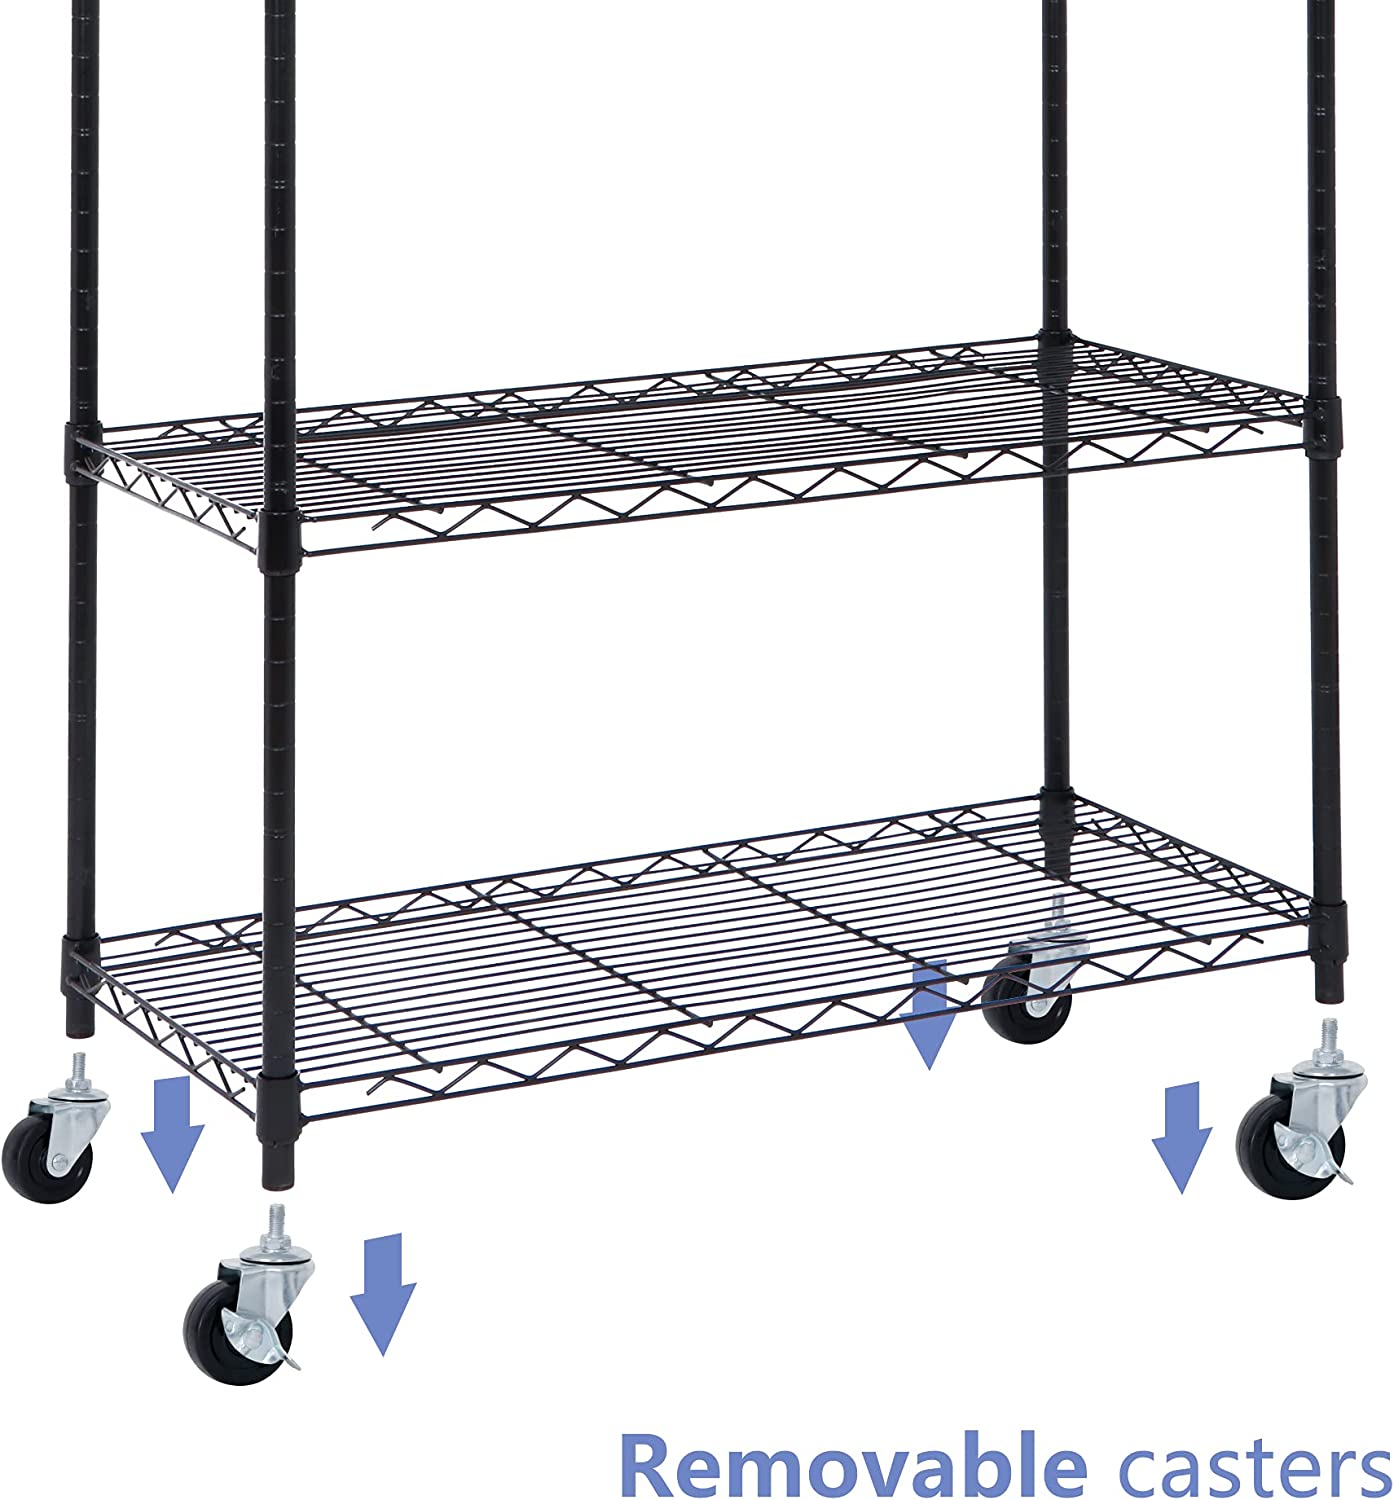 5-Shelf Heavy Duty Shelving Storage Unit with Casters, Metal Organizer Wire Rack for Kitchen, Office, Garage, Black